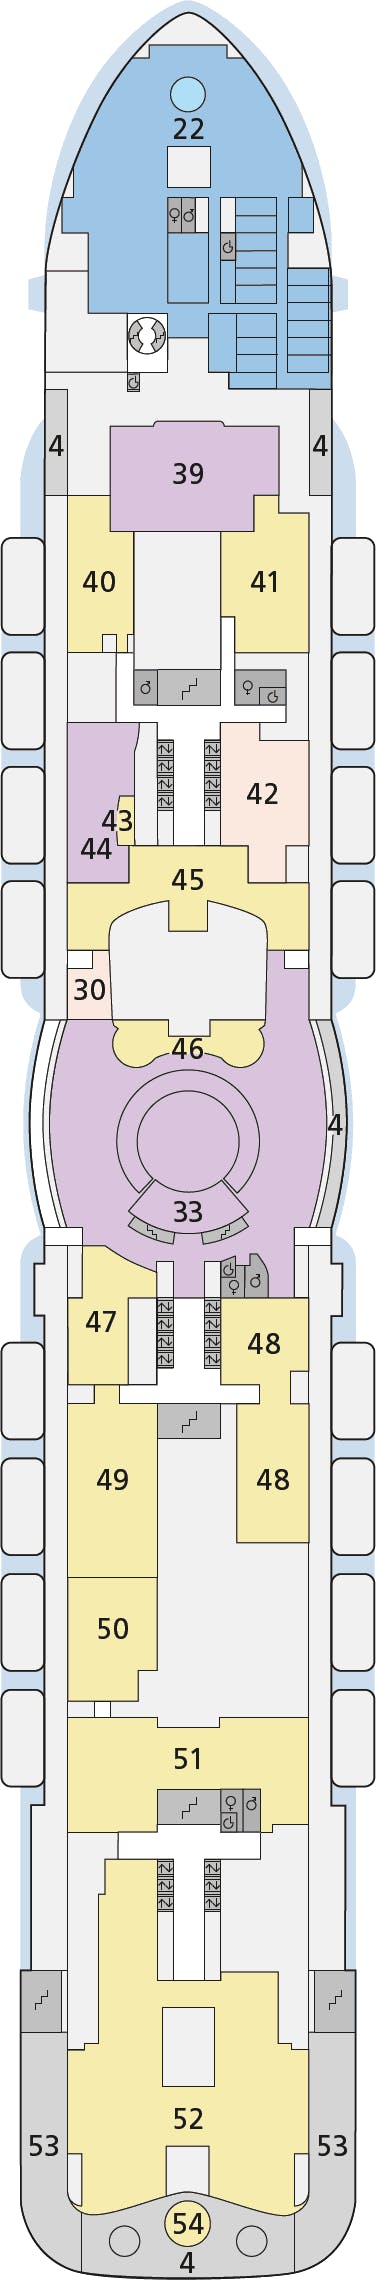 AIDAcosma - AIDA Cruises - Deck 7 (Deck 7)